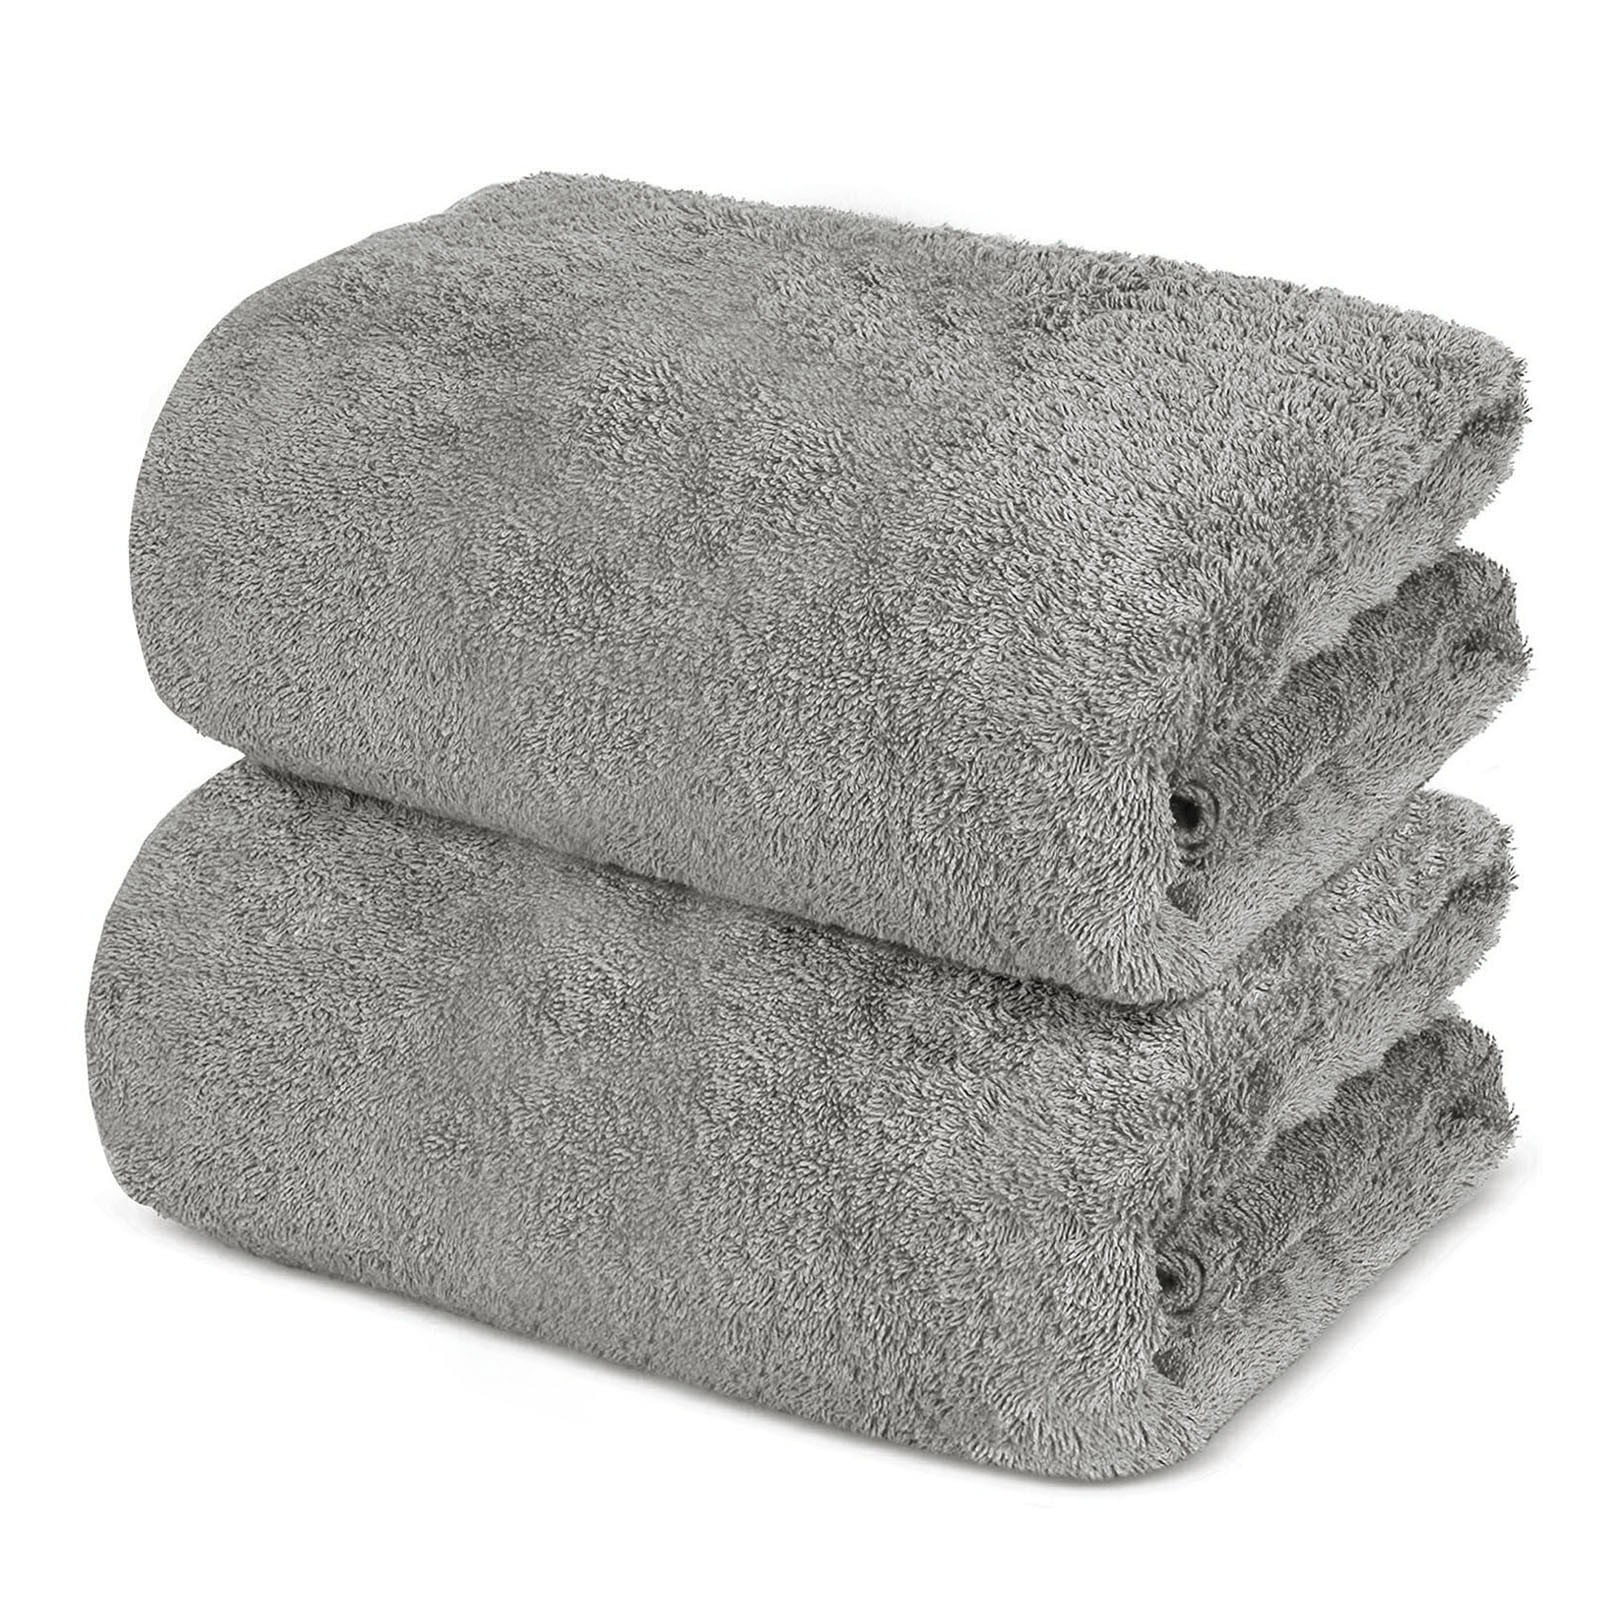 700 GSM 100% Cotton Soft Absorbent Hand Bath Towels or Jumbo Bath Sheet Set 